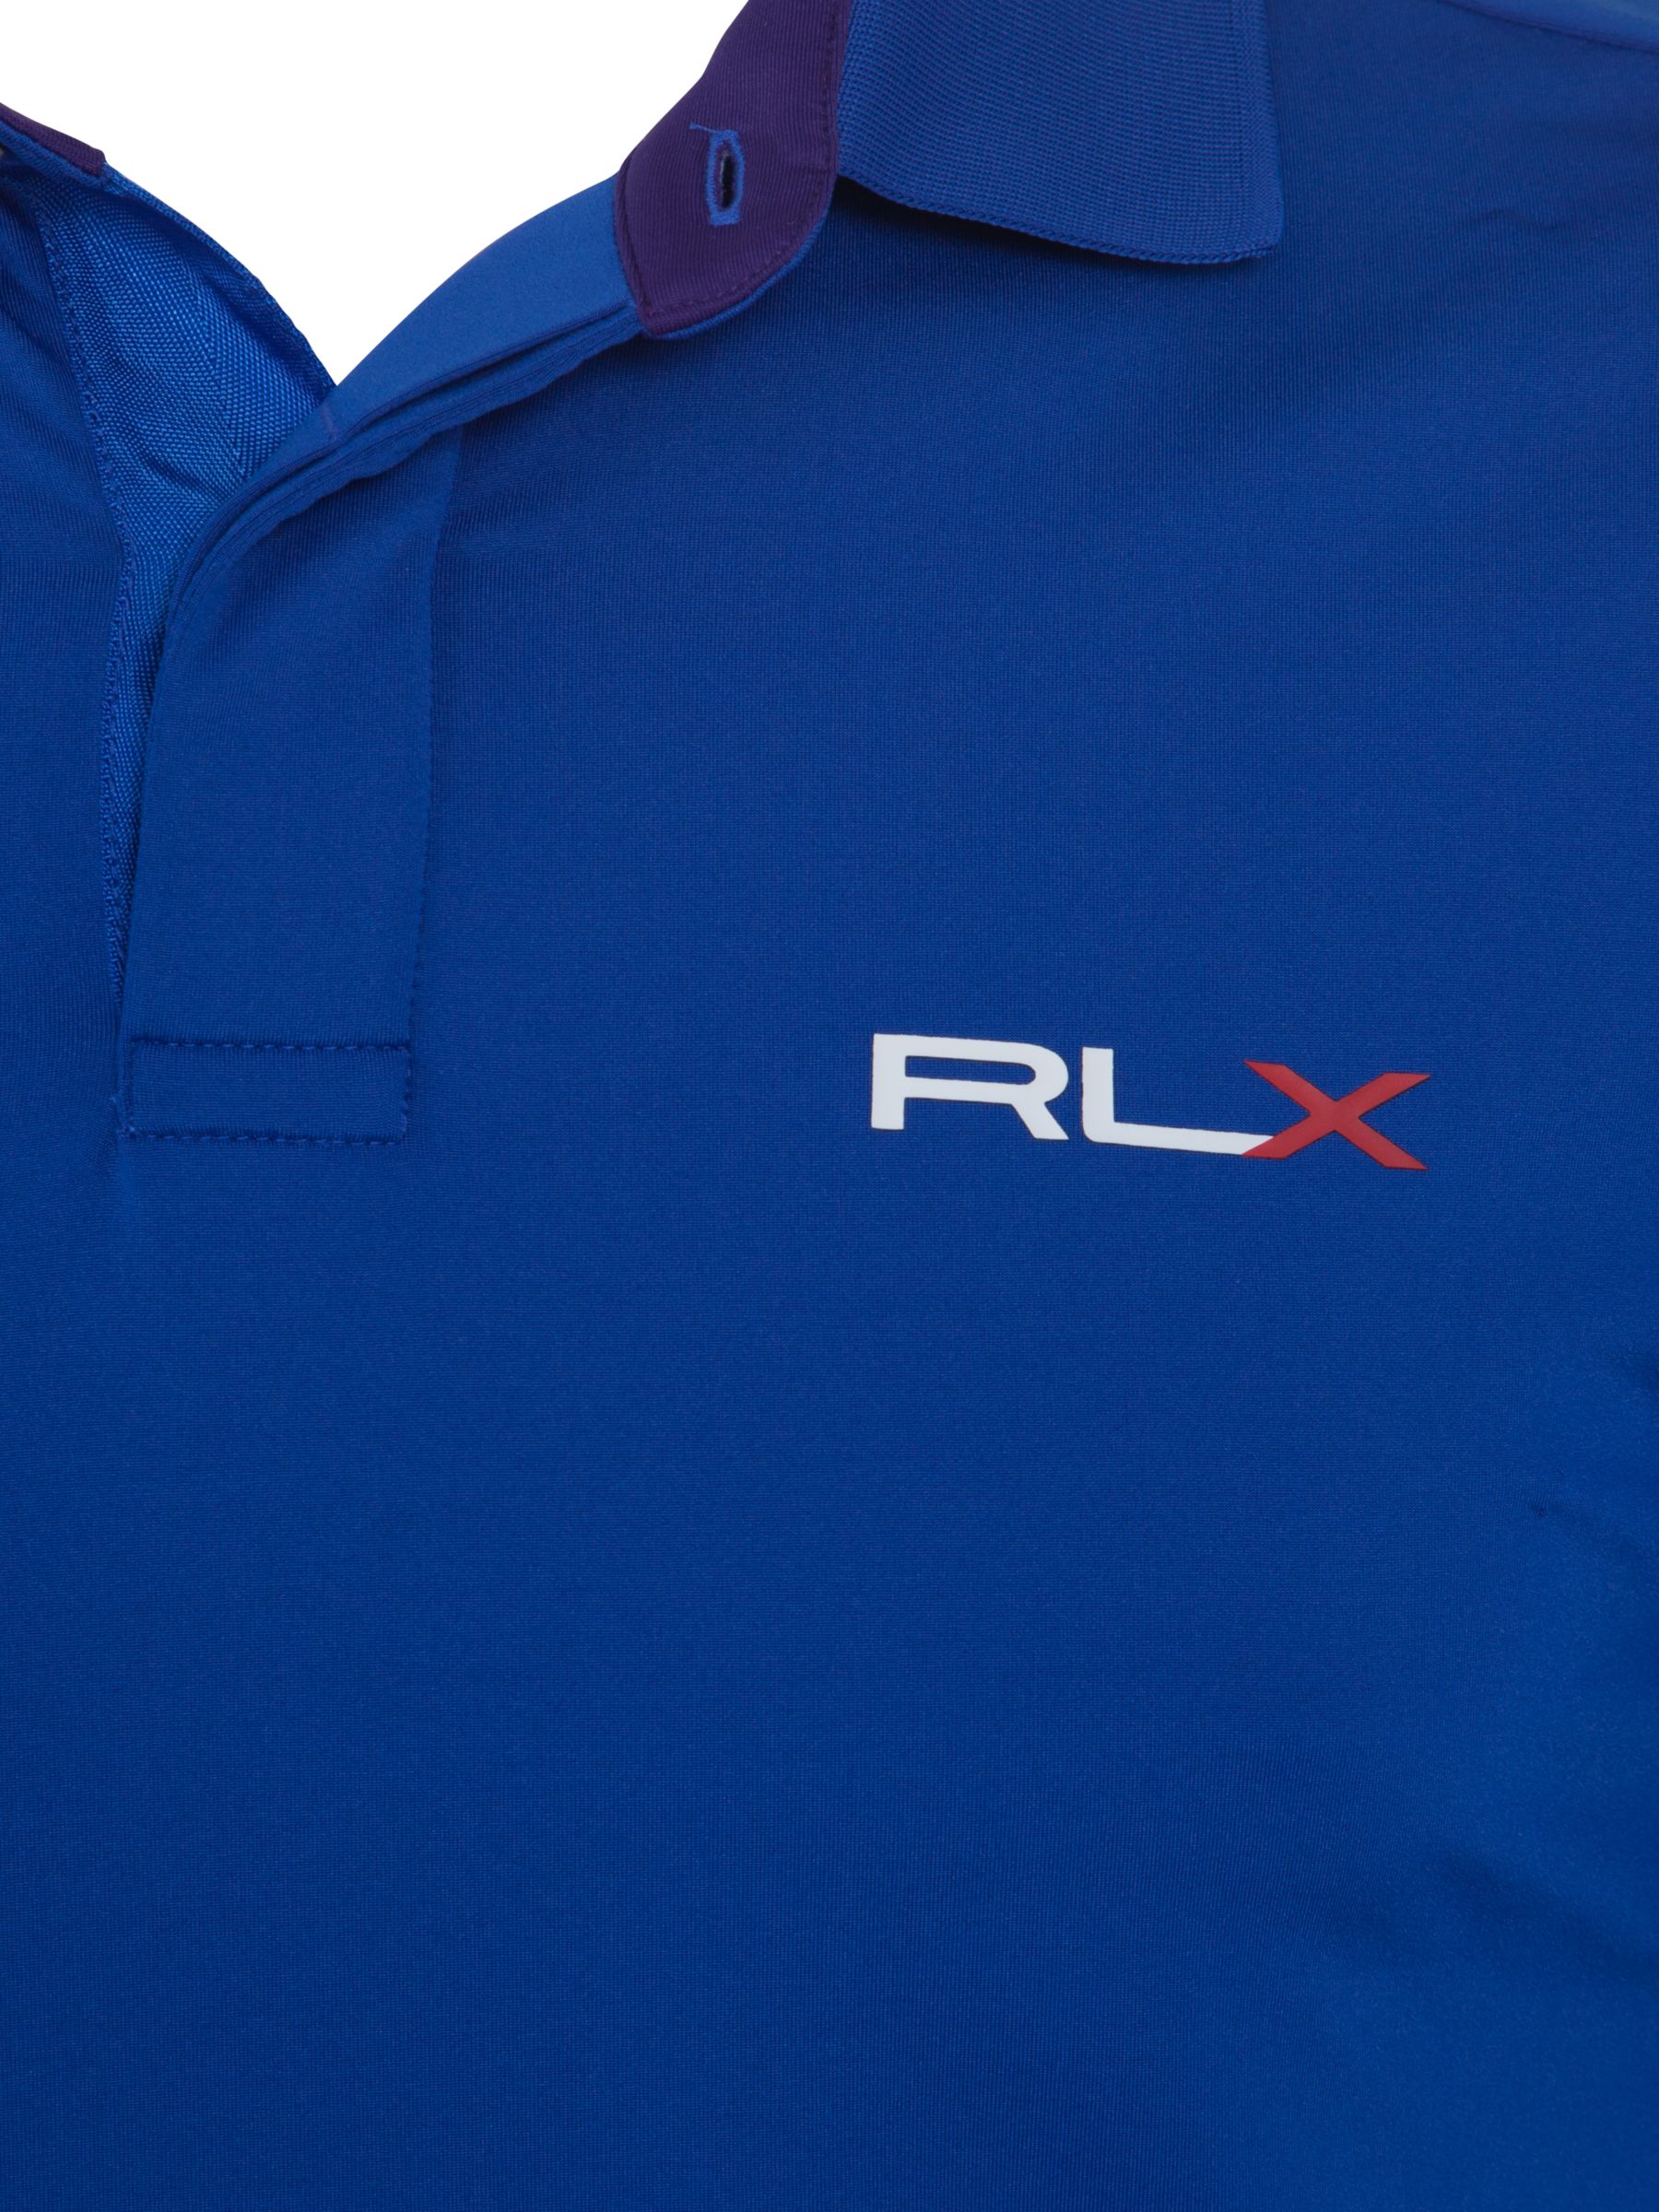 Ralph Lauren RLX Golf Solid Tour Fit 